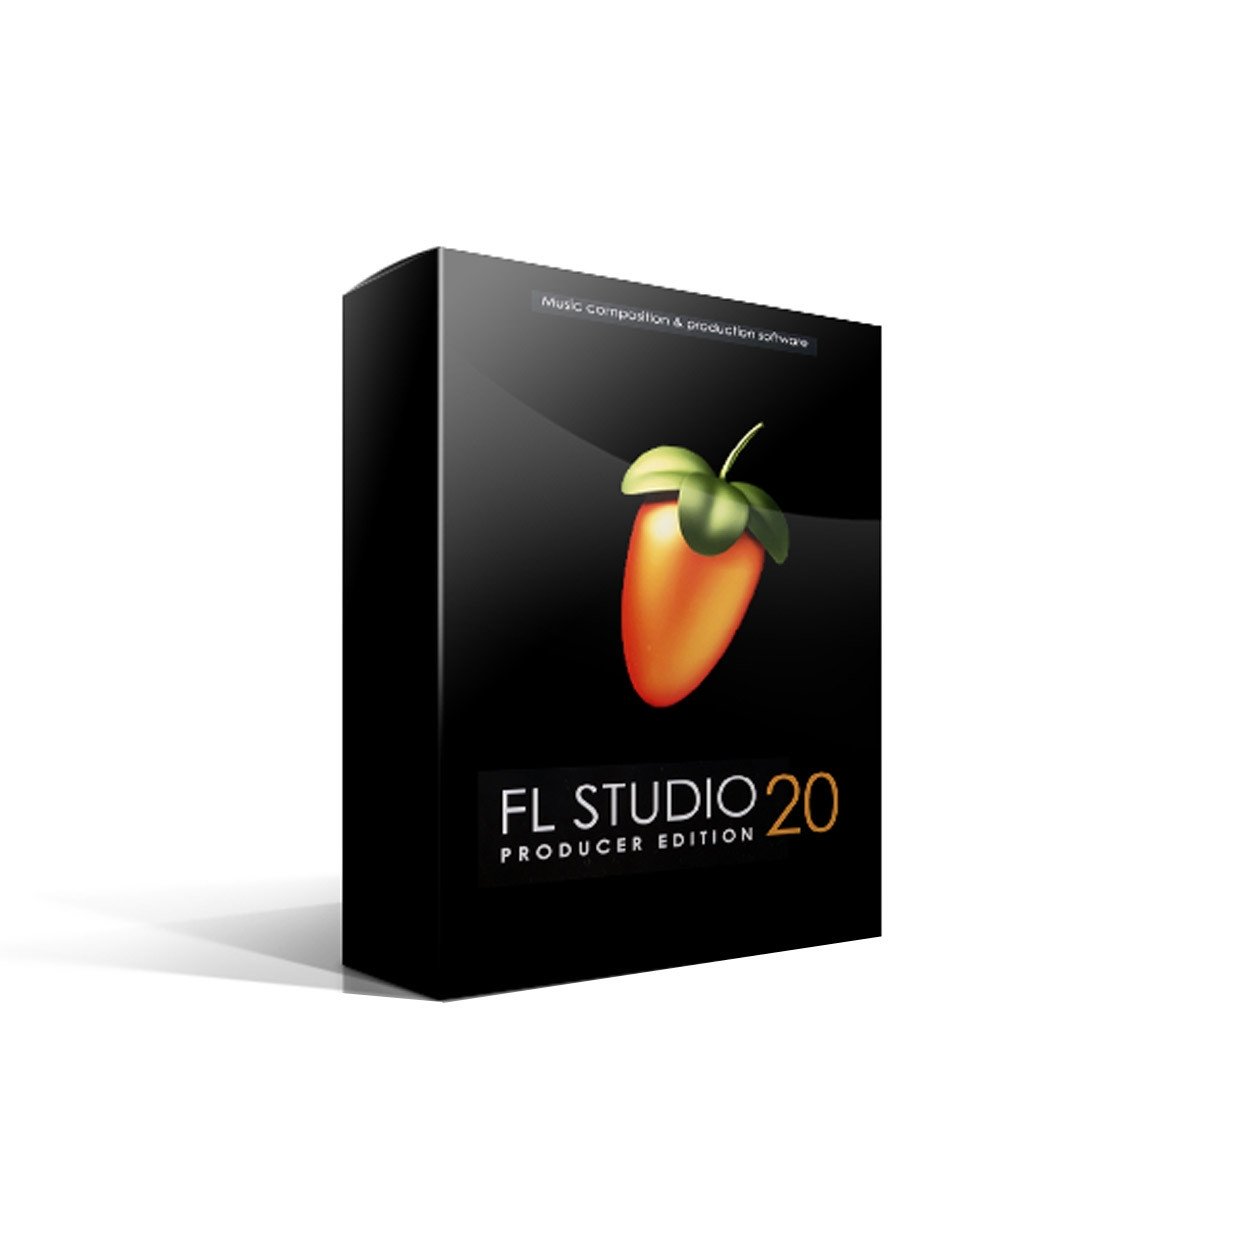 FL Studio 20 Producer